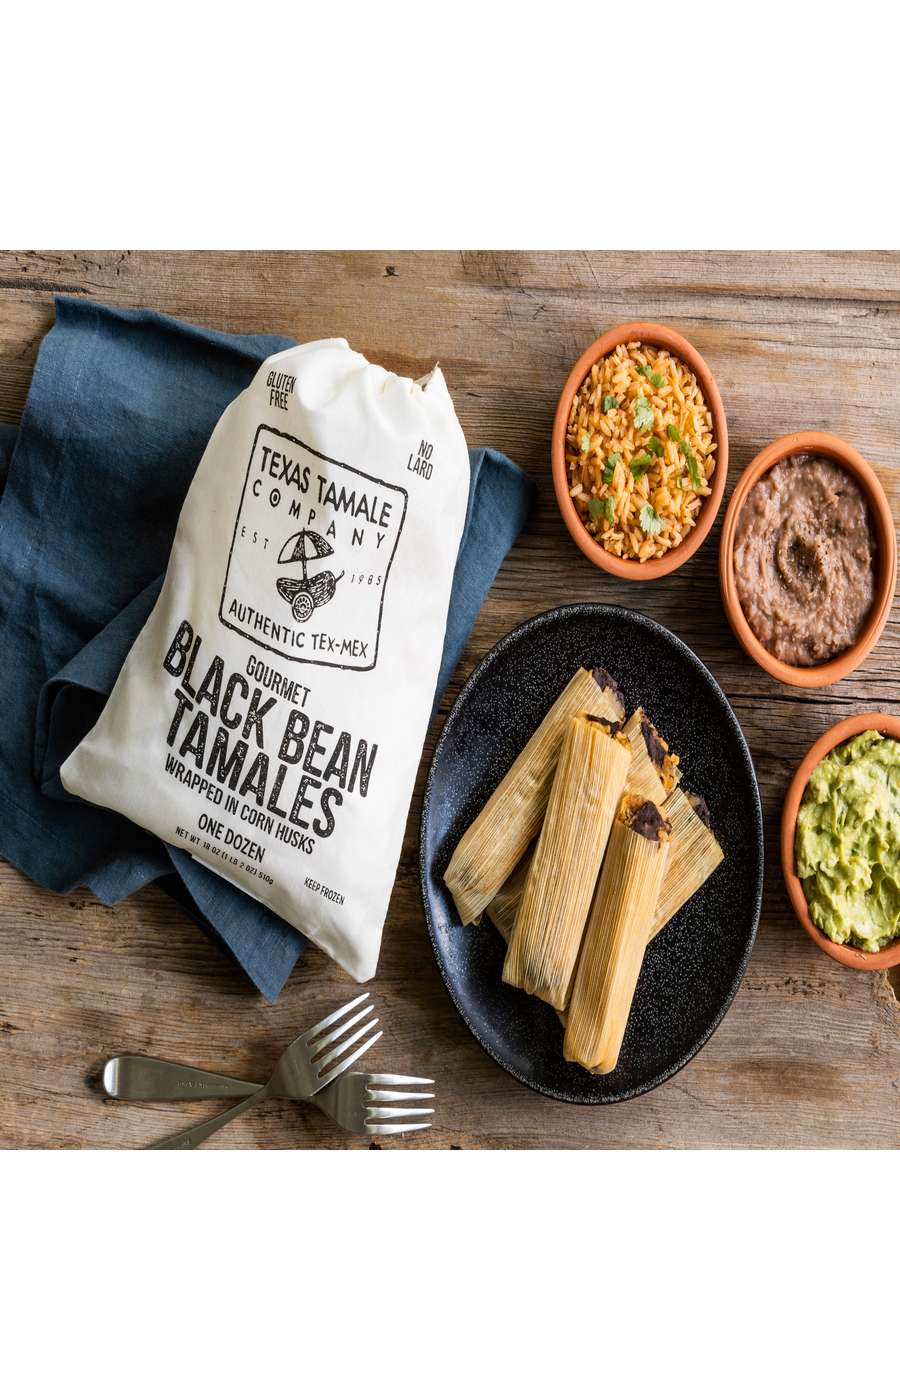 Texas Tamale Company Black Bean Tamales; image 2 of 3